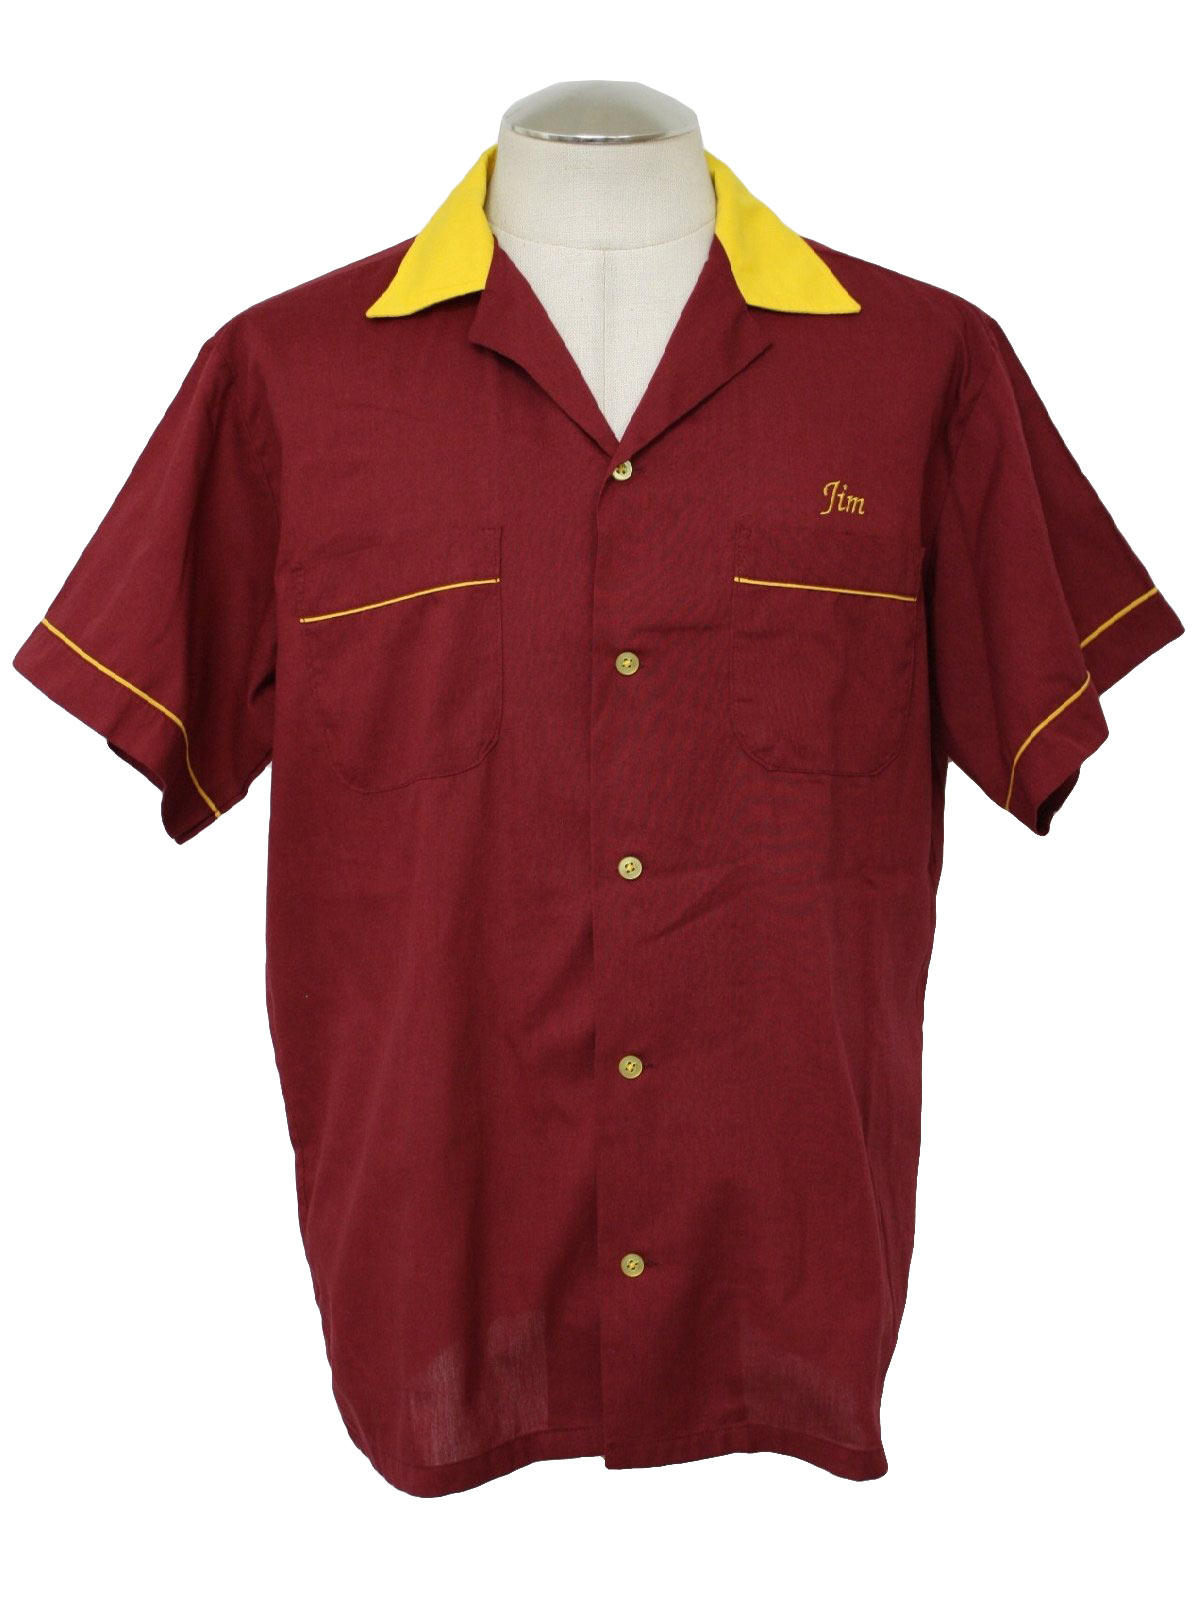 Retro 1990s Bowling Shirt: 90s -Hilton- Mens burgundy and gold cotton ...